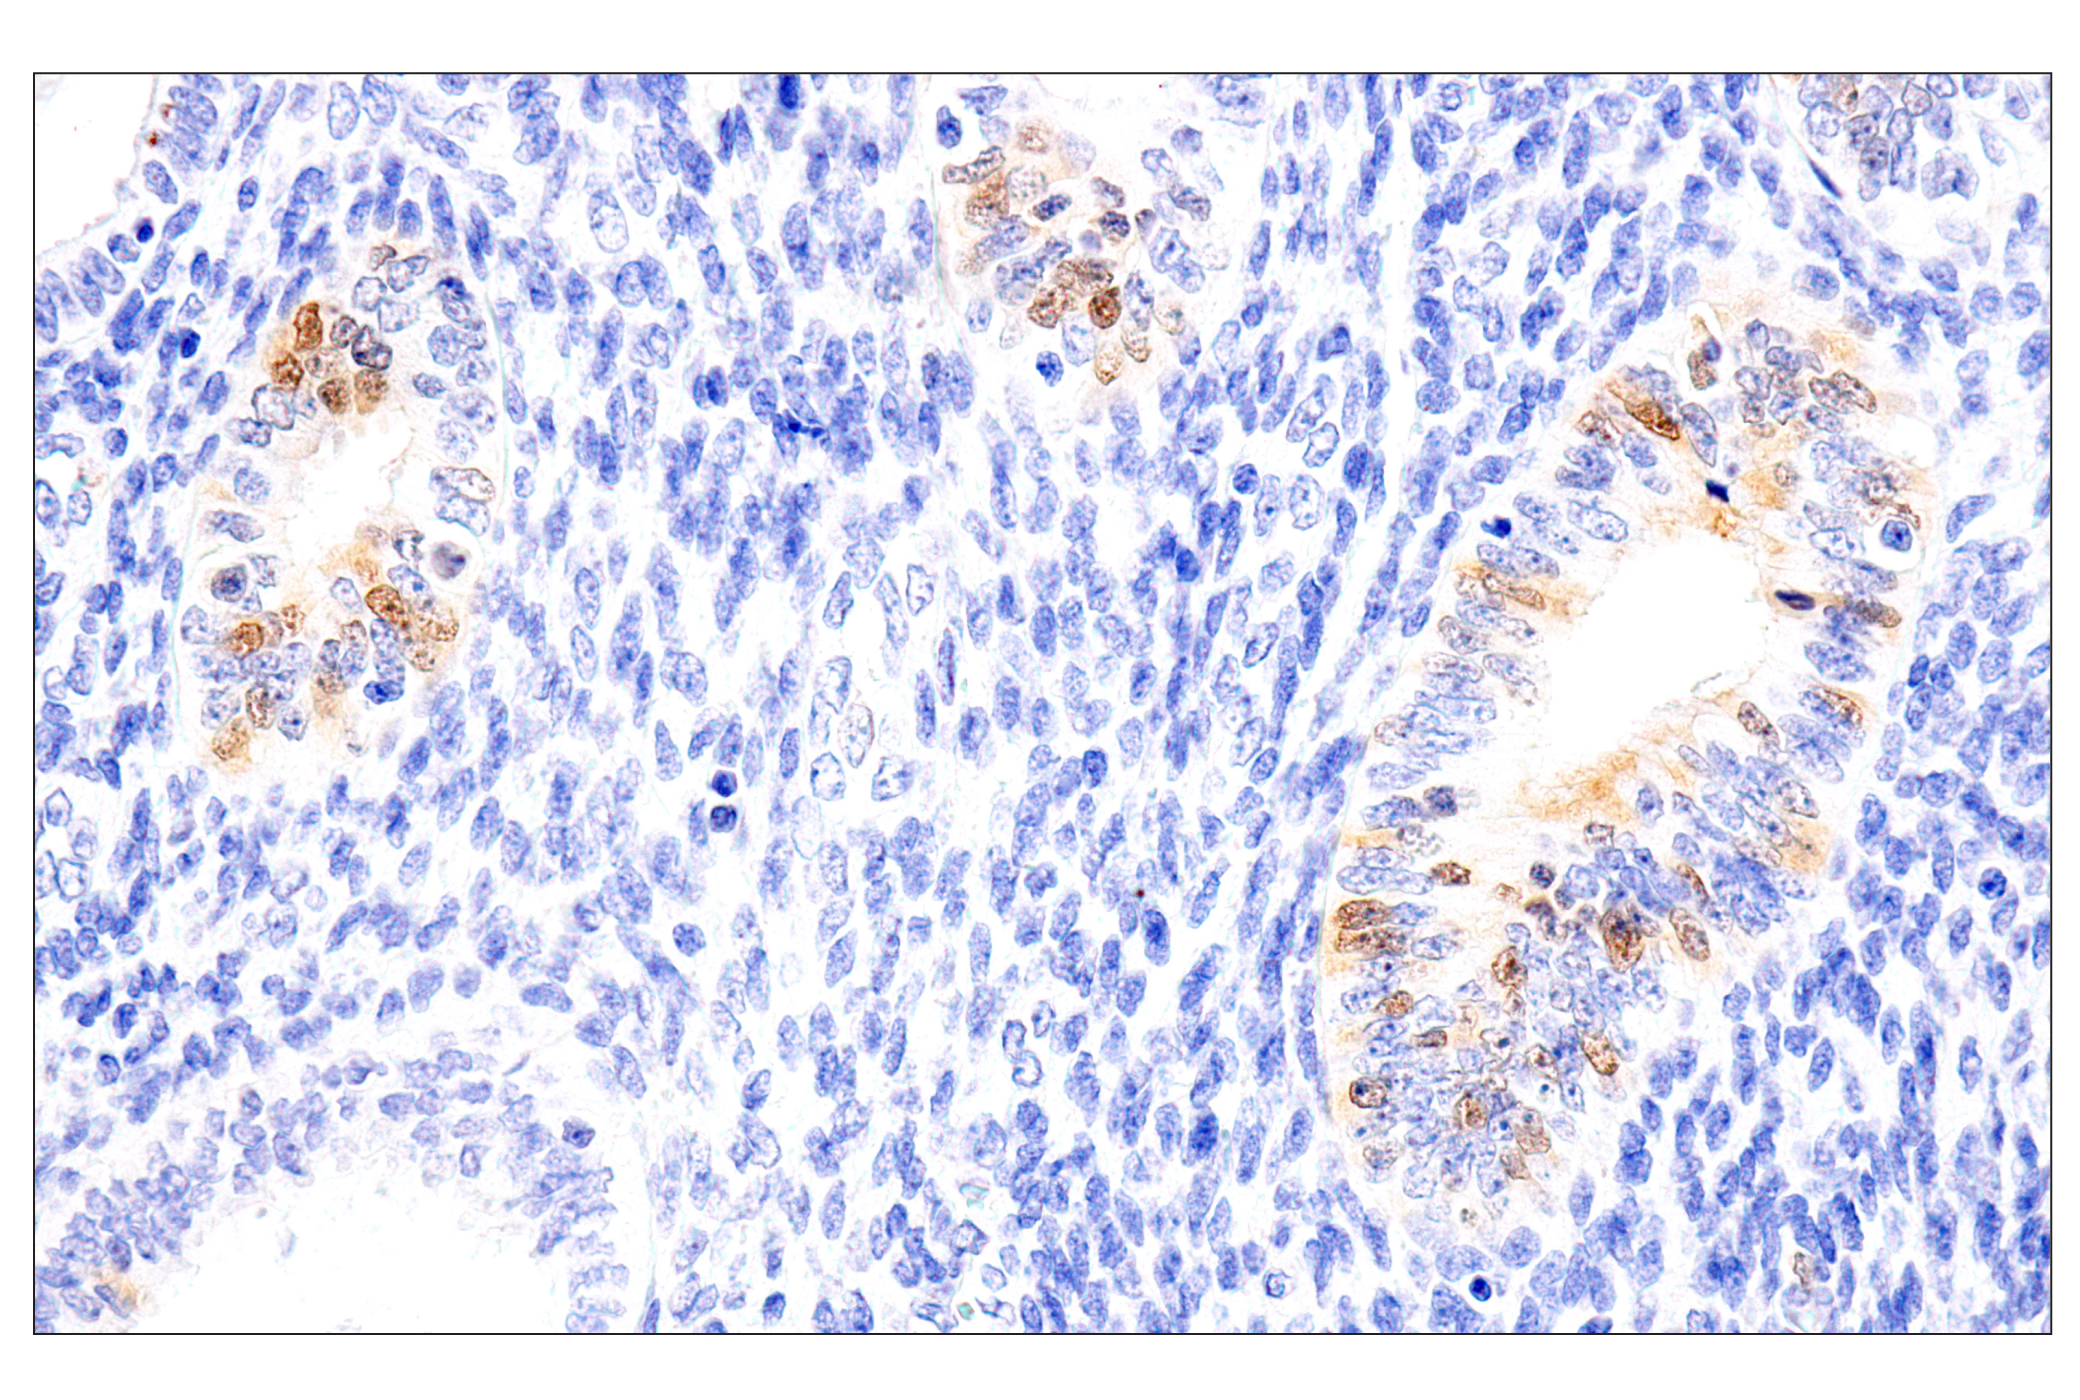  Image 16: PhosphoPlus® Chk1 (Ser317) Antibody Duet